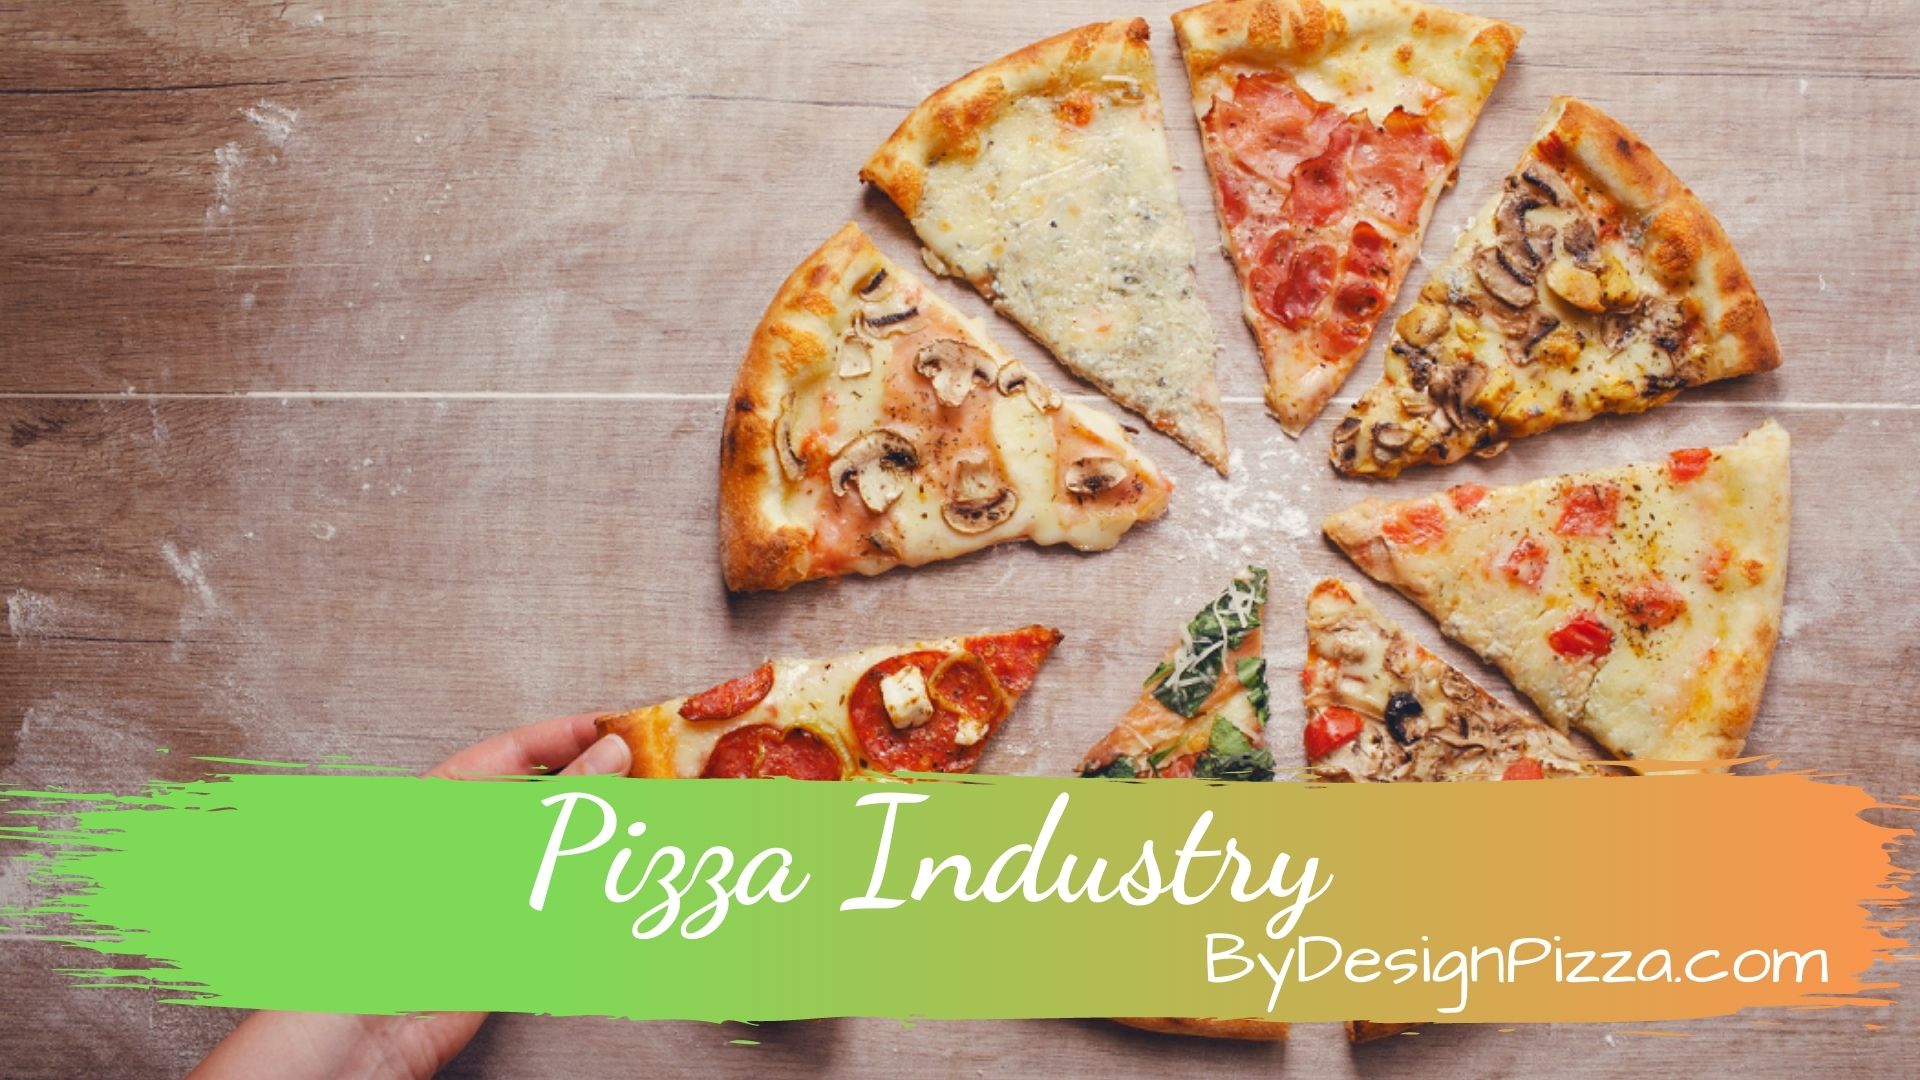 Pizza Industry Revenue